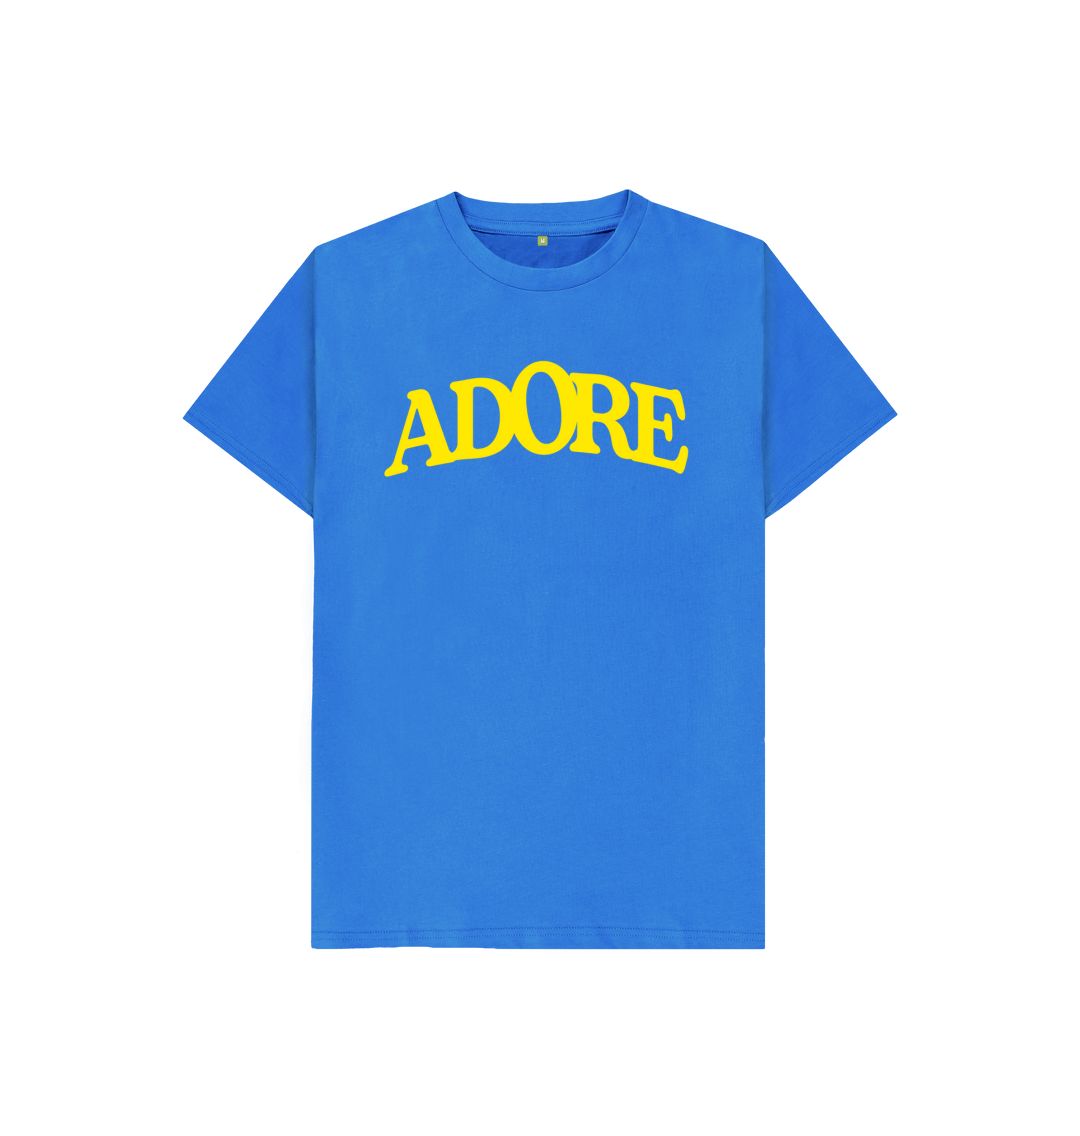 Bright Blue Doobee Adore Adore Kids Tee